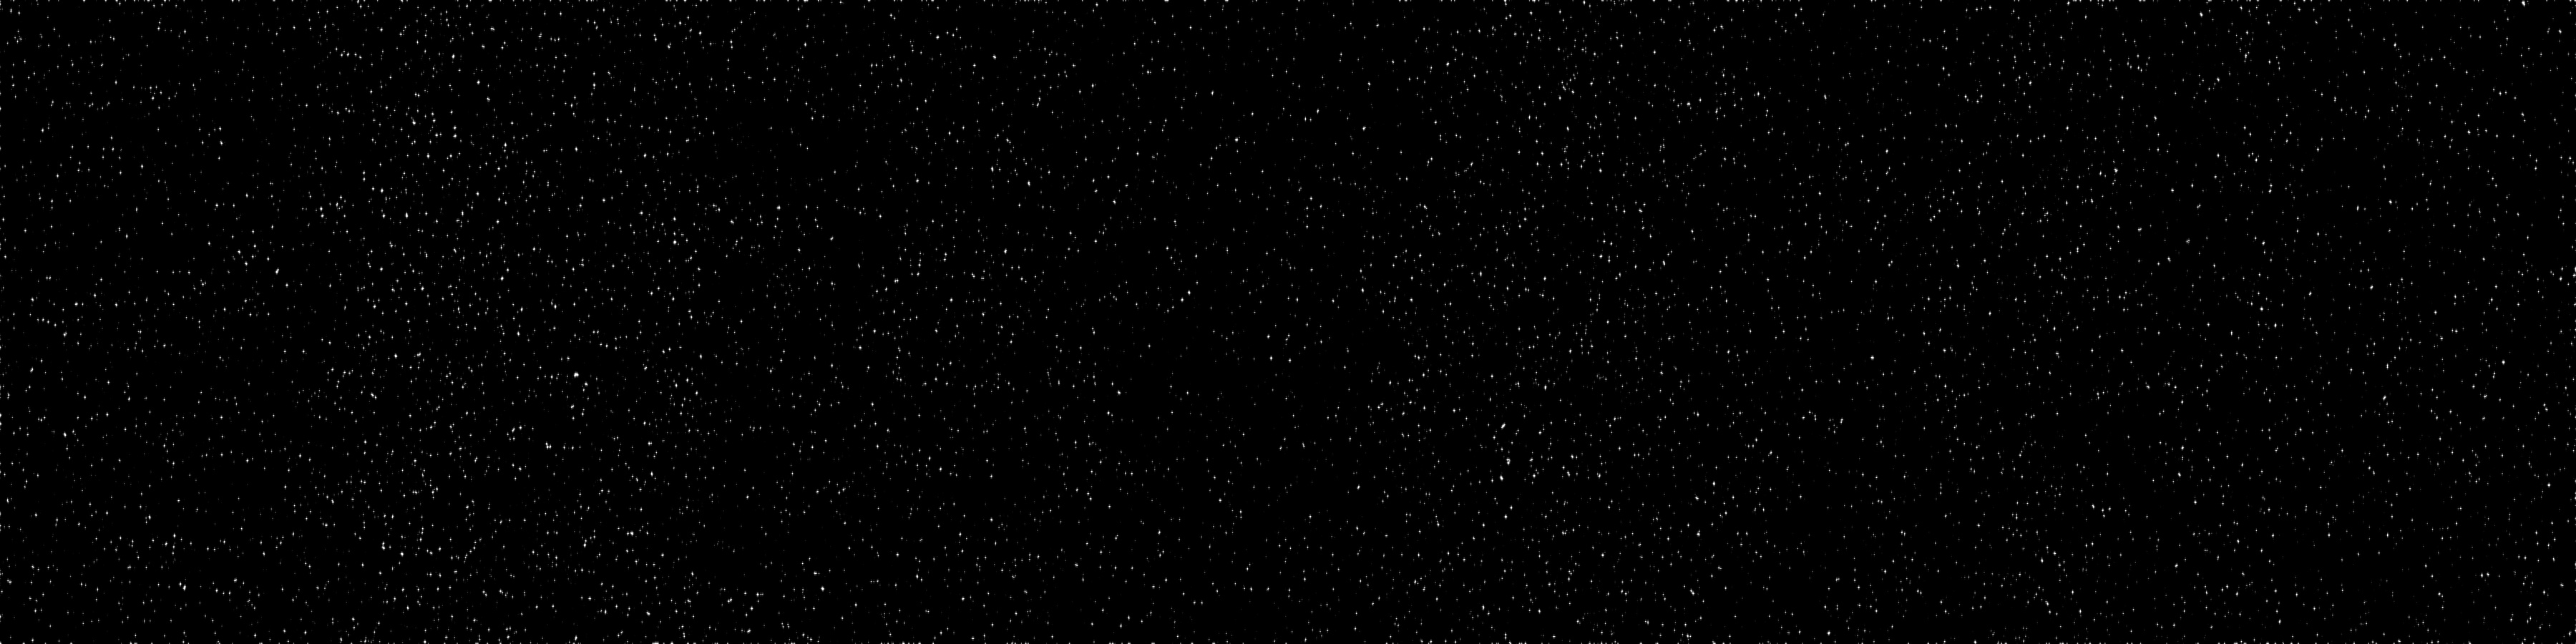 A starry black night sky banner